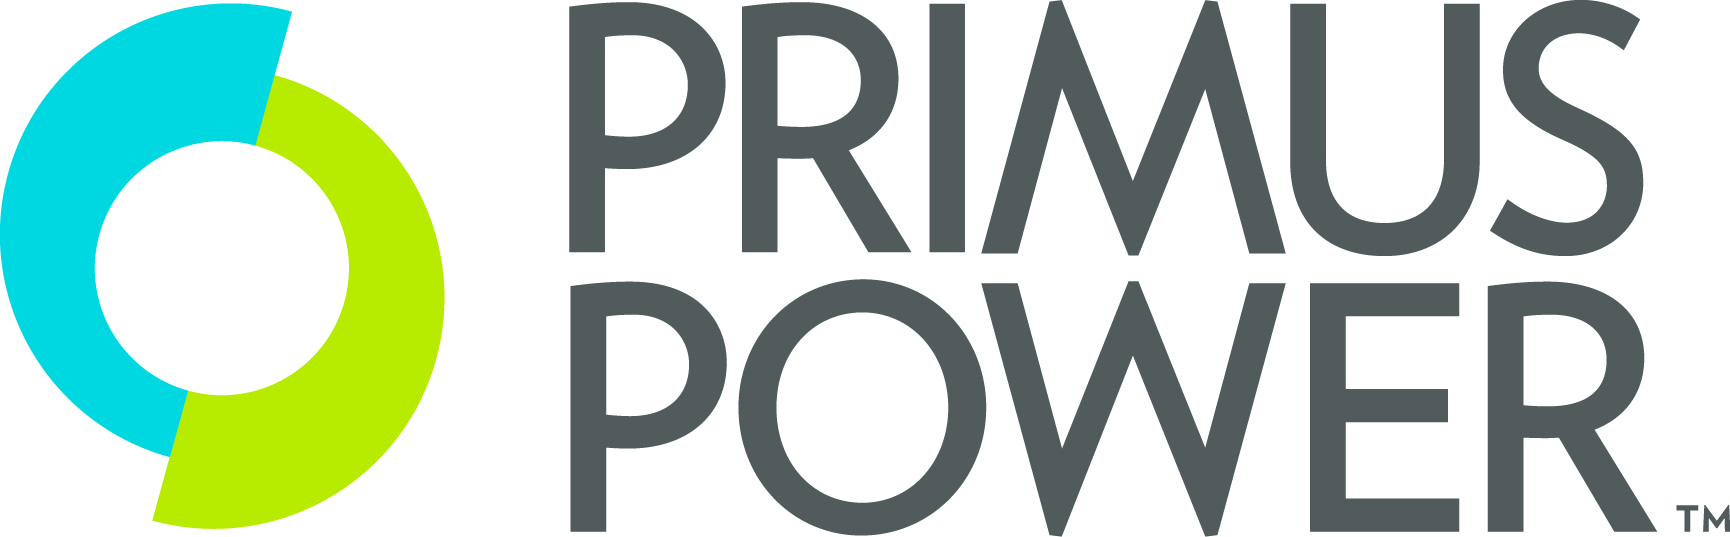 Primus Power and OSI